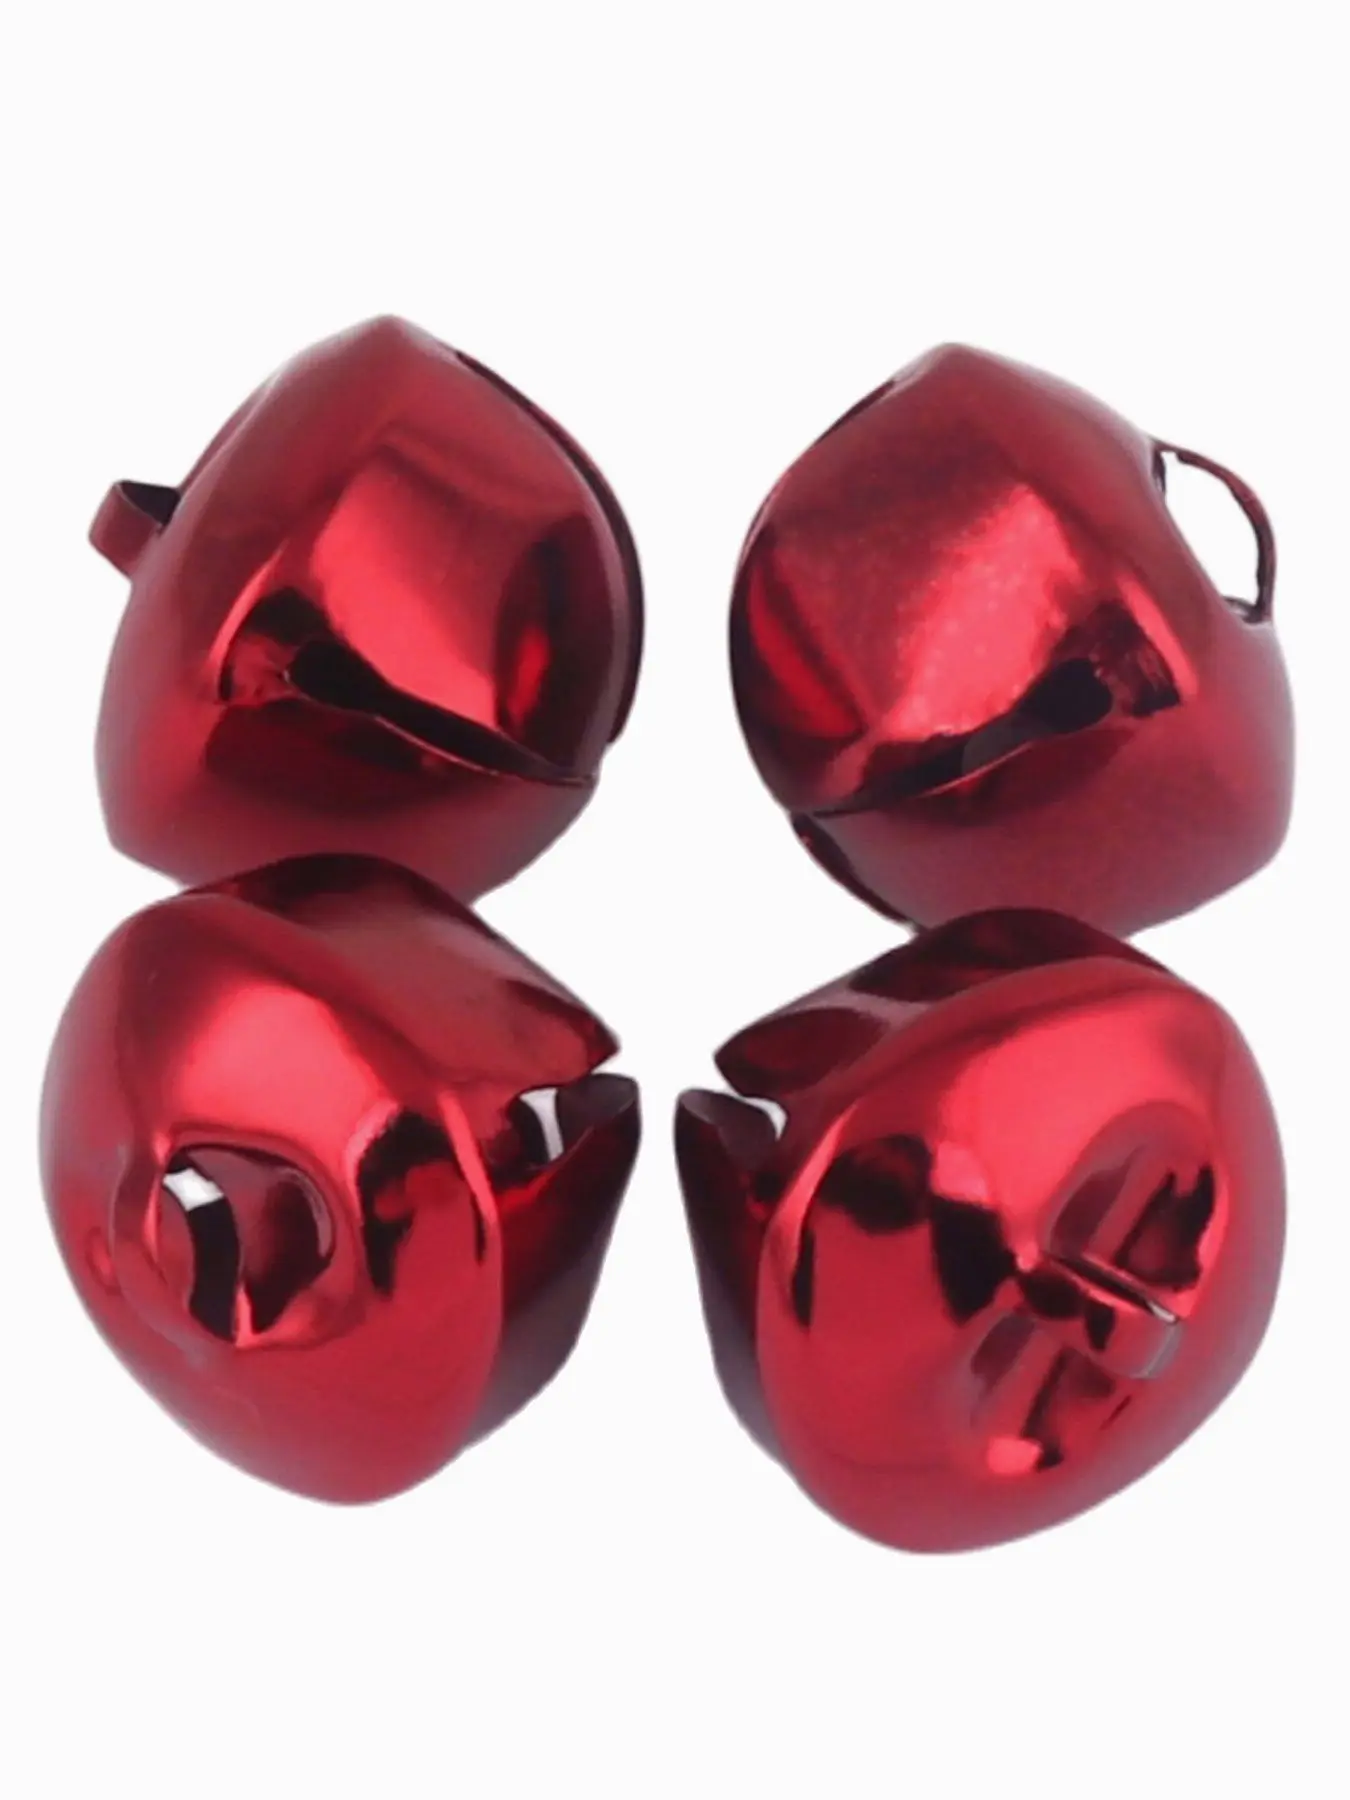 

Jingle Bells Red Christmas Bells Decorative Bells Sound Bells Bulk Jingle Bells Charm Pendants 29mm Jewelry Making Findings